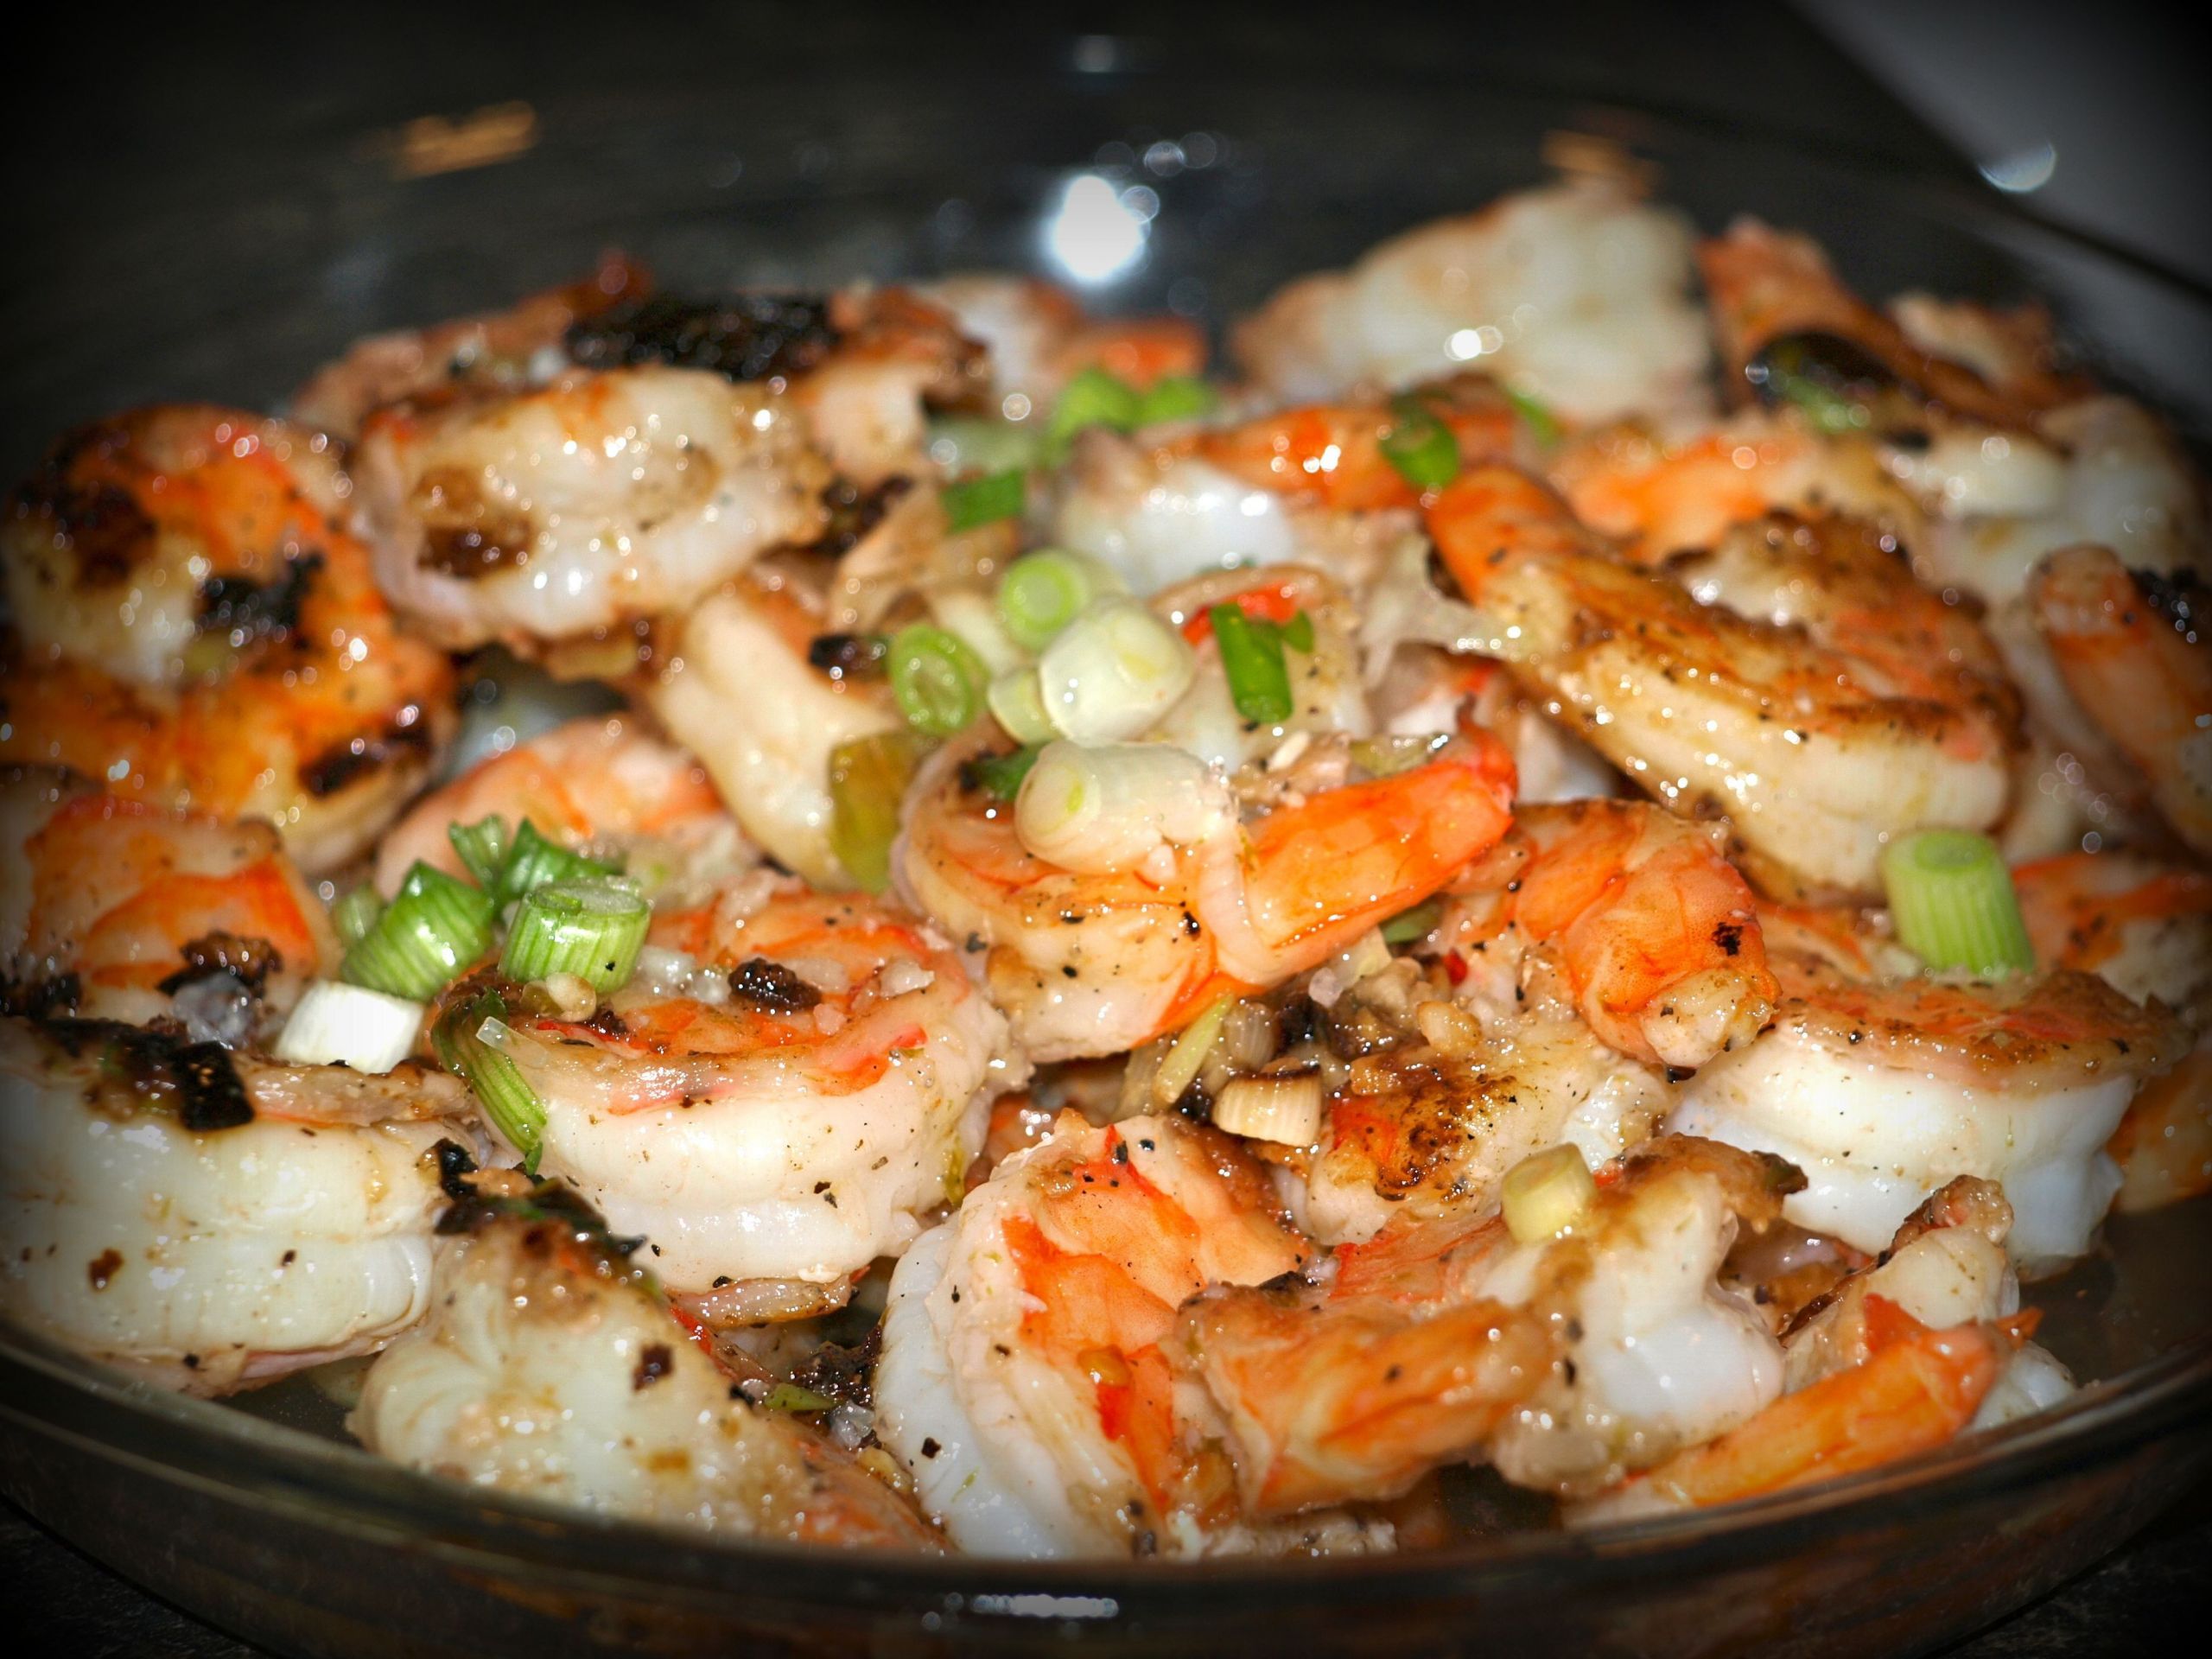 Cold Shrimp Recipes Appetizers
 Best 25 Cold appetizers ideas on Pinterest